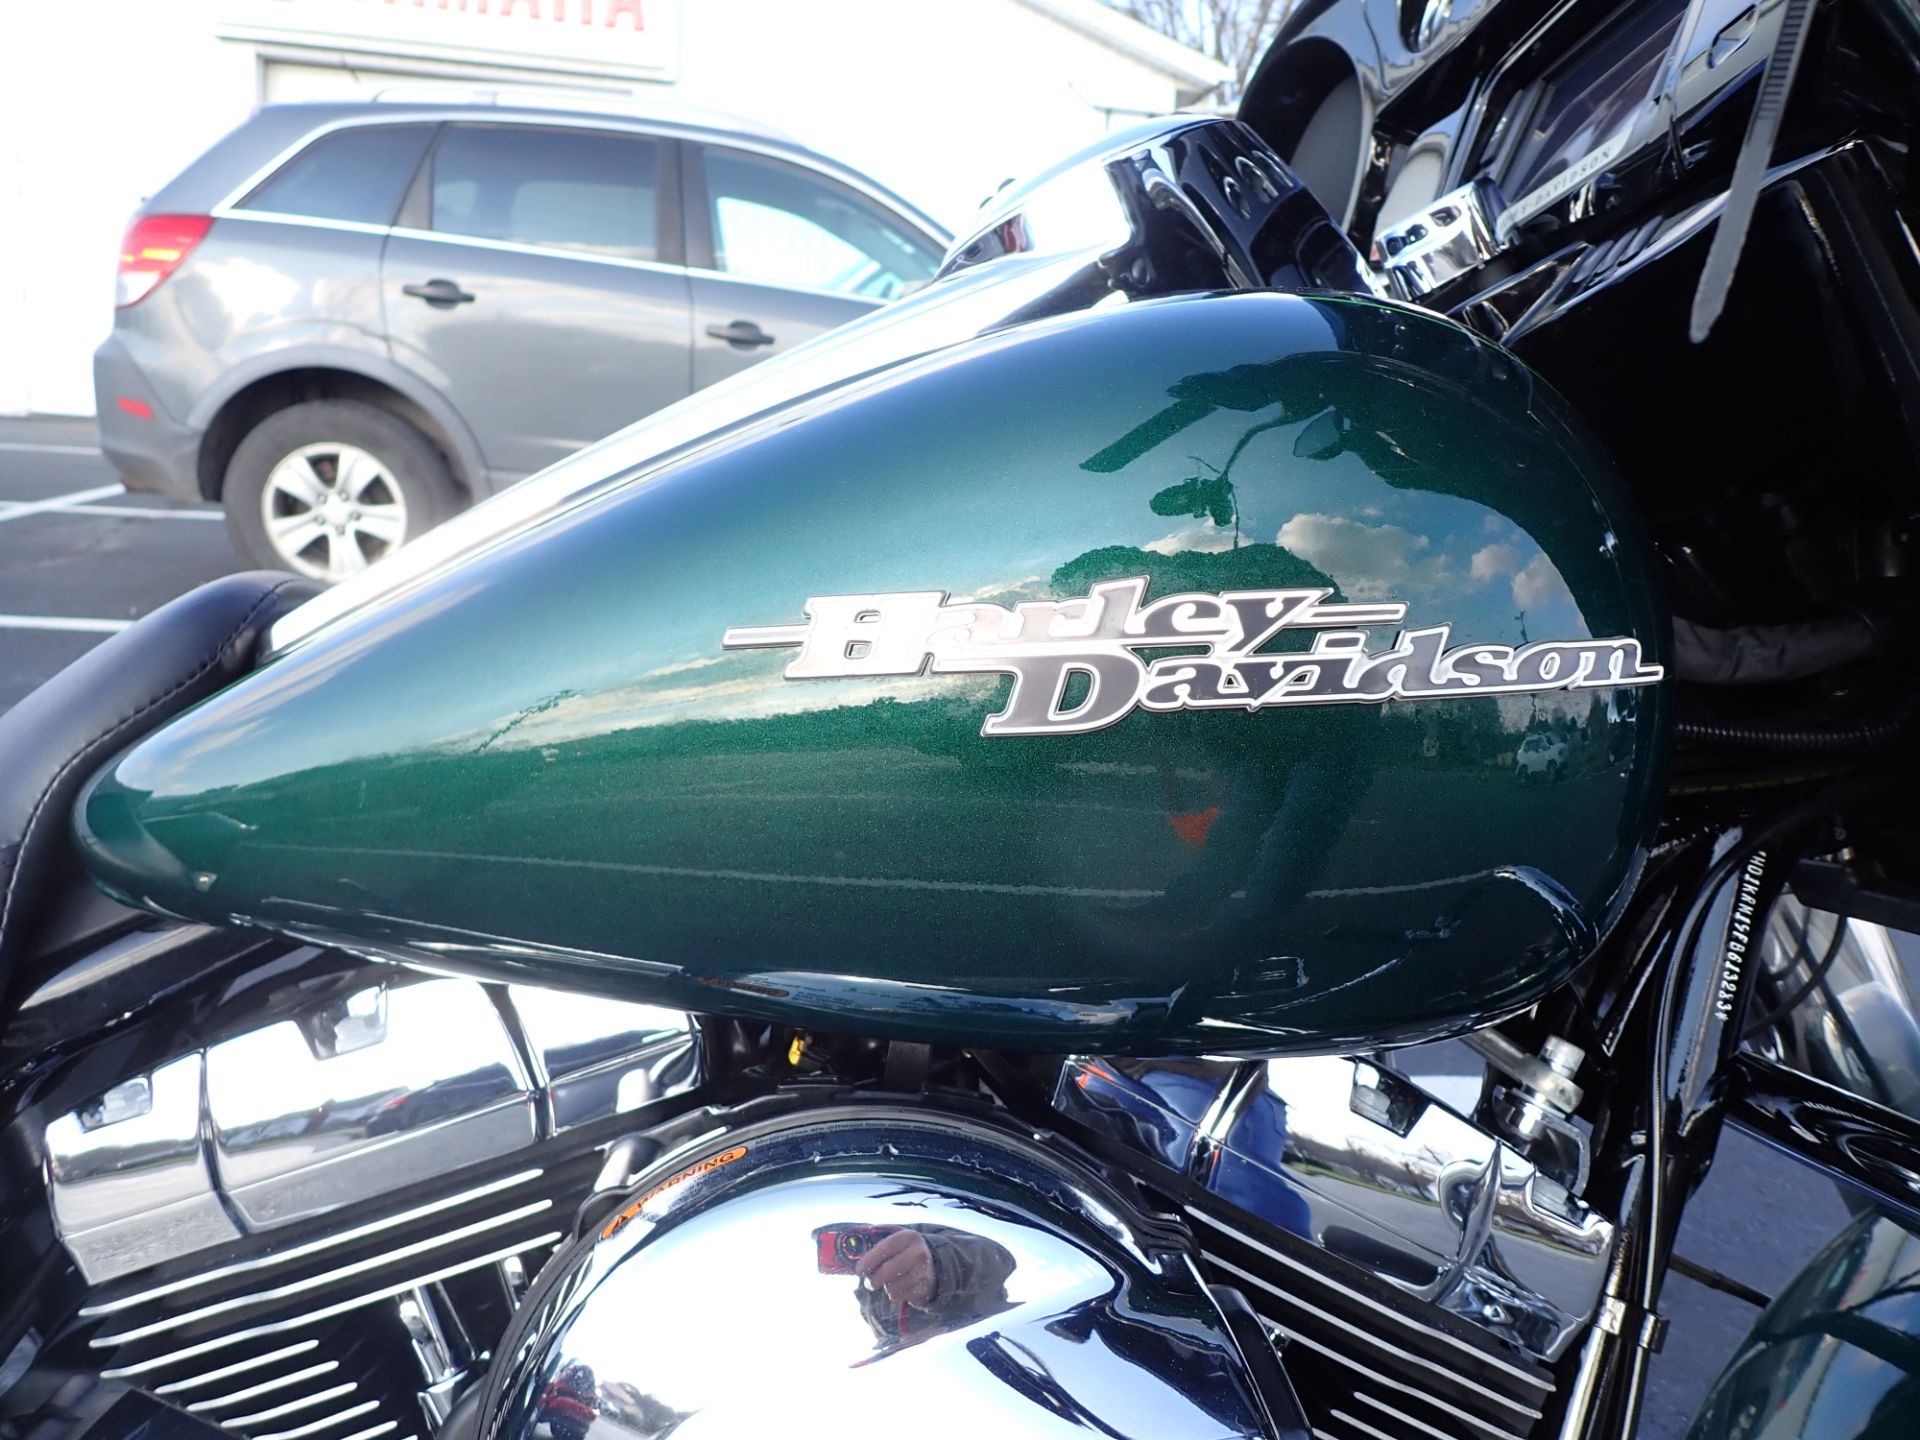 2015 Harley-Davidson Street Glide® Special in Massillon, Ohio - Photo 3